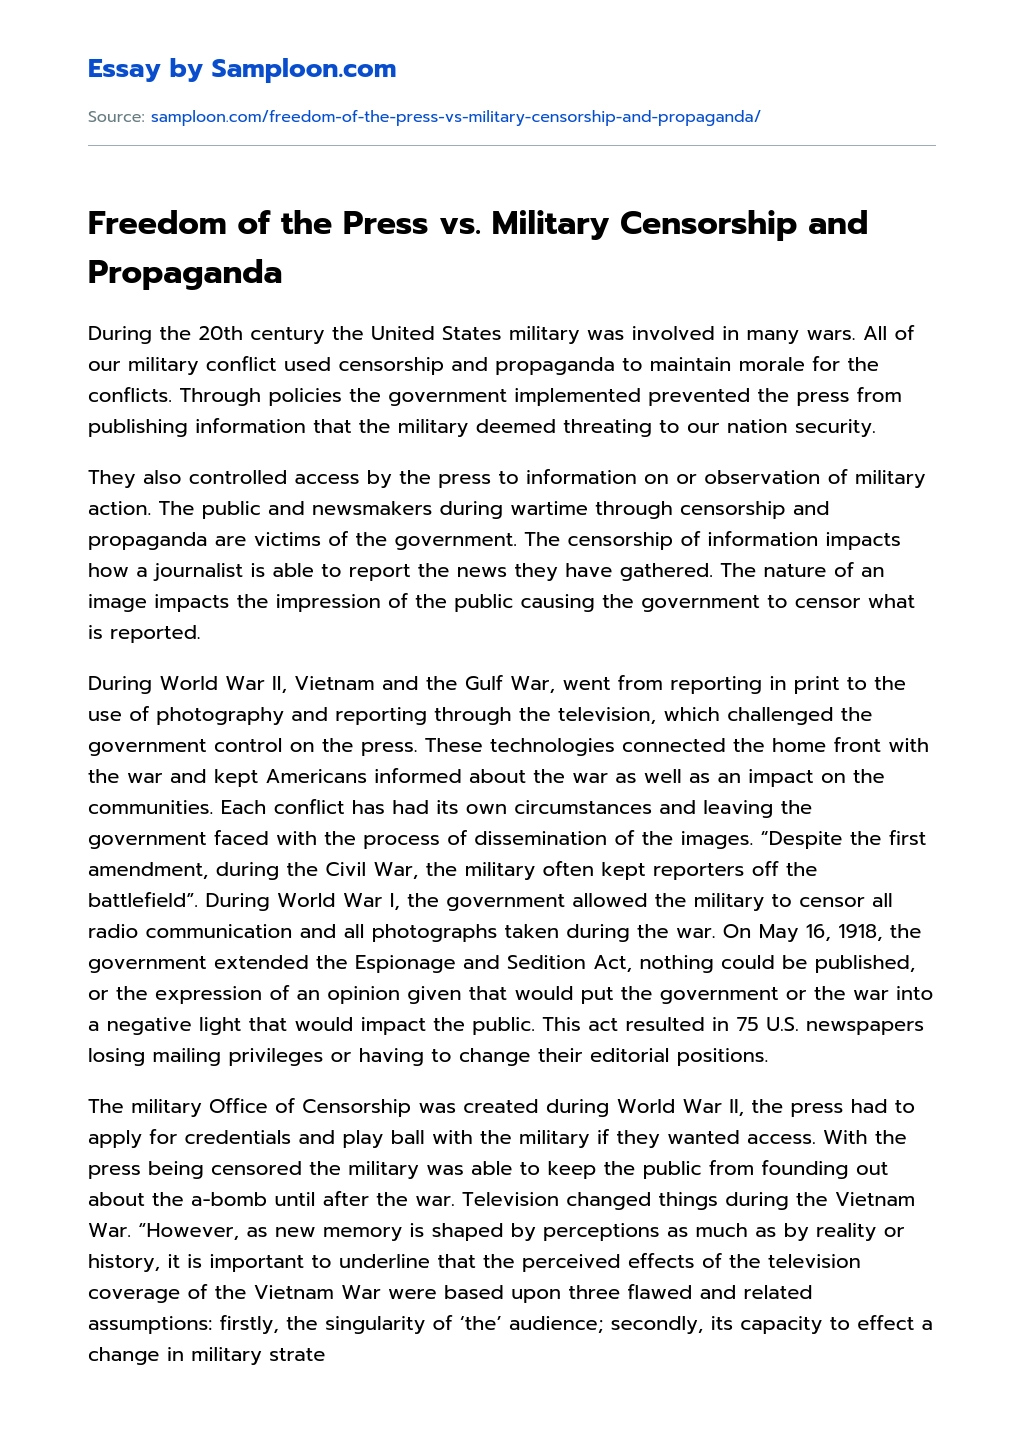 Freedom of the Press vs. Military Censorship and Propaganda essay